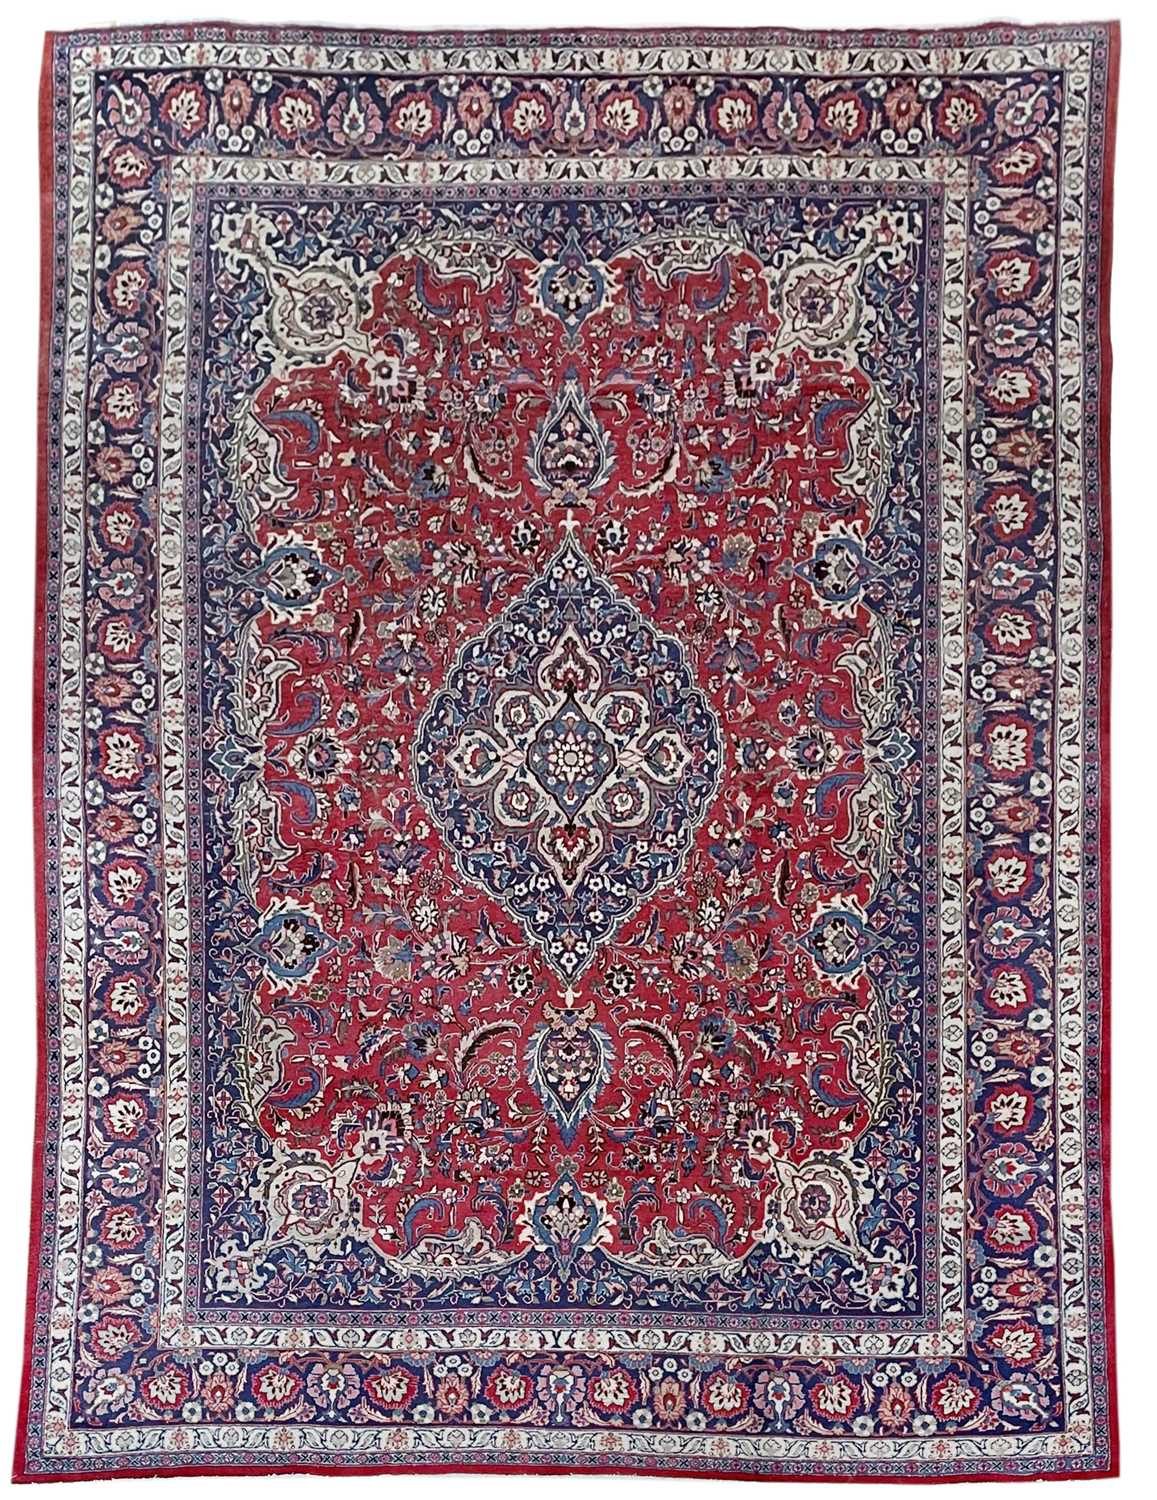 A Tabriz carpet, North West Persia, mid 20th century.